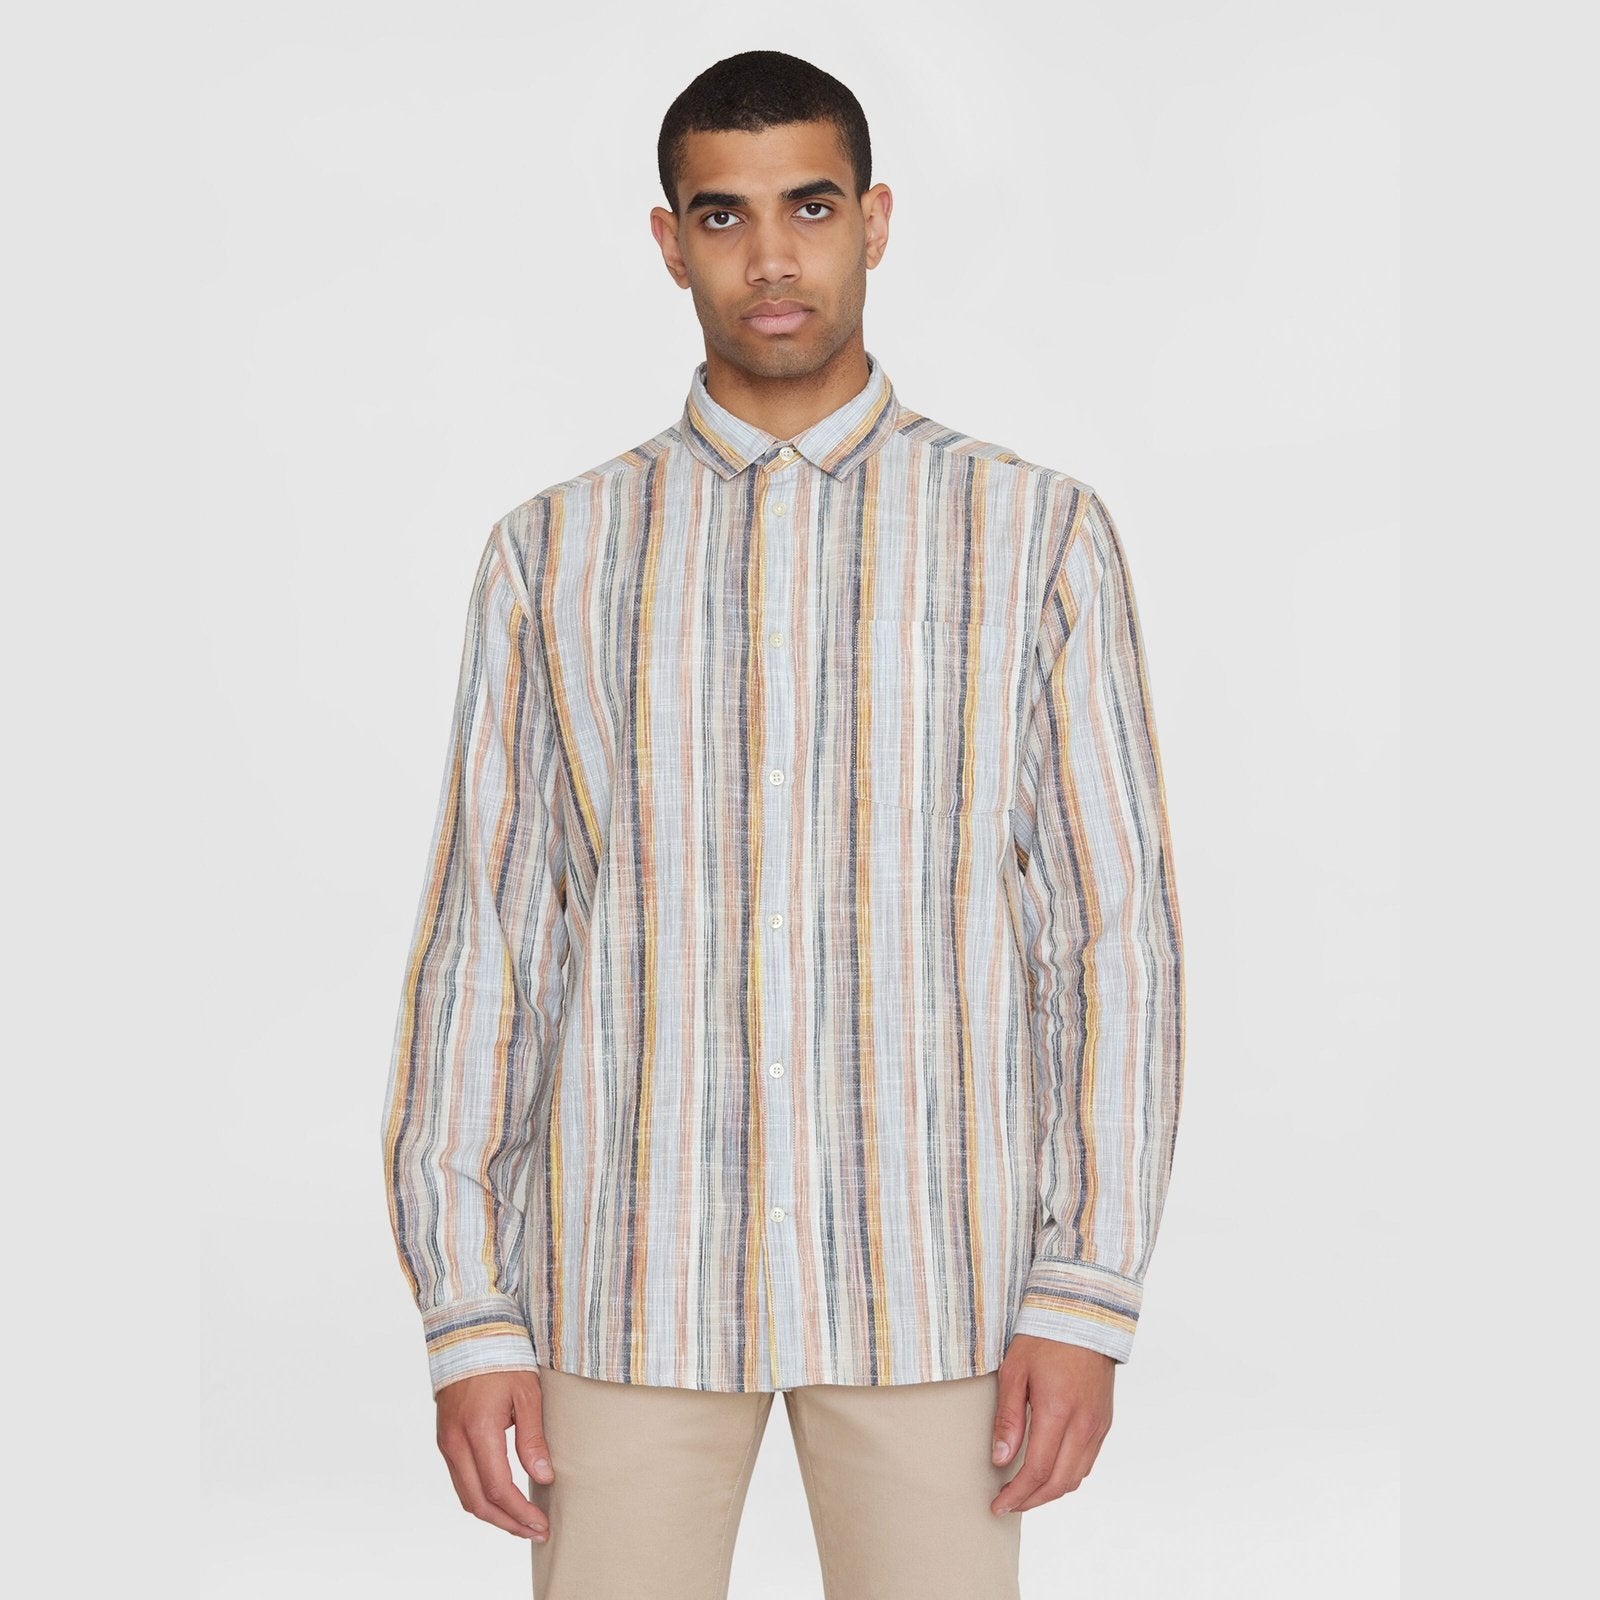 Knowledge Cotton Apparel M Loose Linen Shirt Multicolored Striped